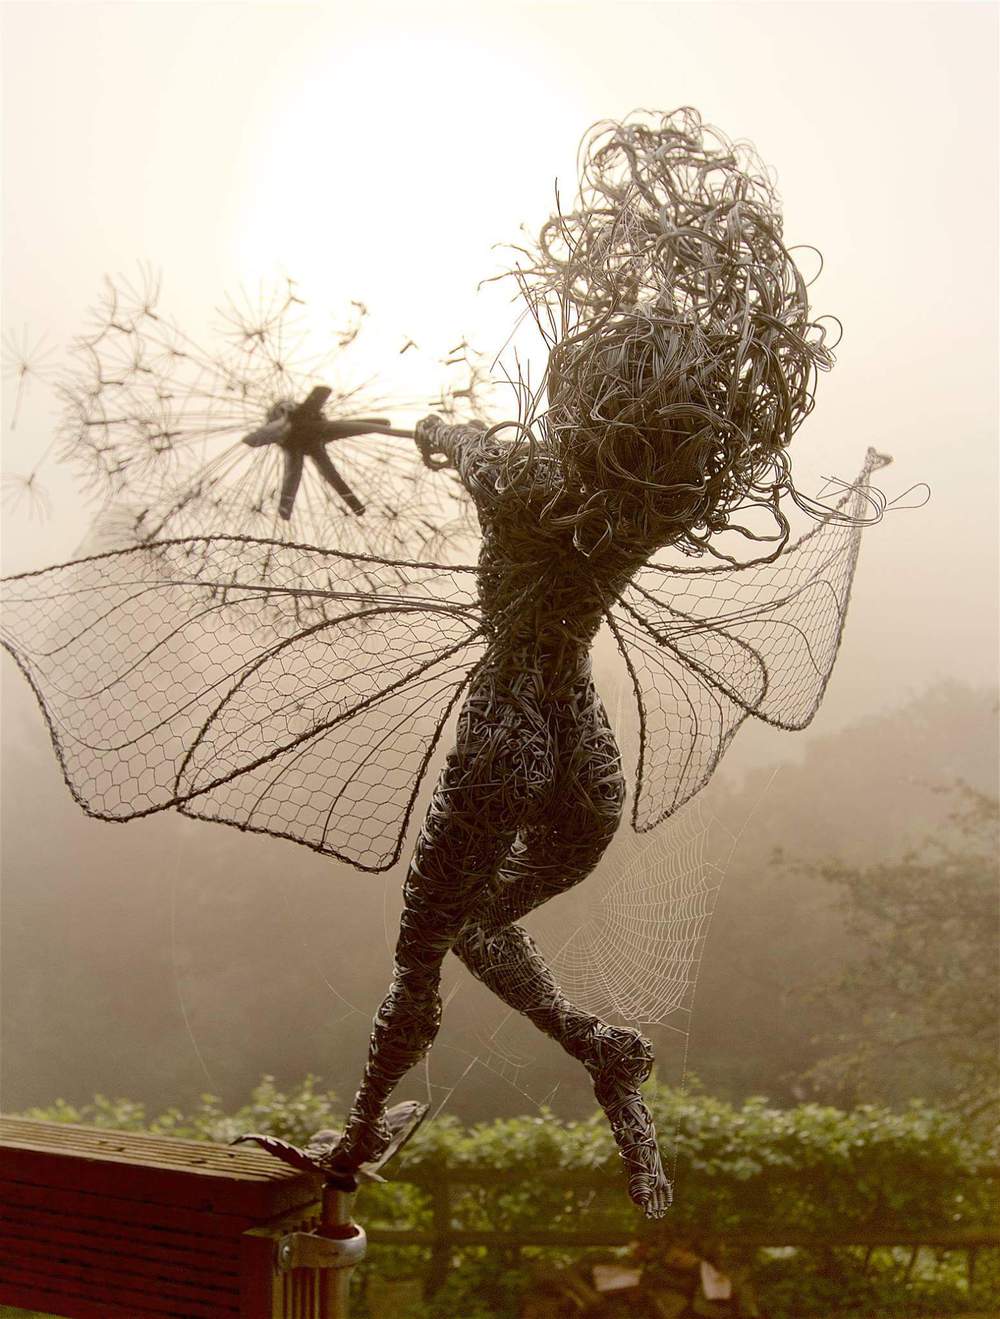 Wire Sculptures of Fairies by Robin Wight - Art - Design - Creative - Blog